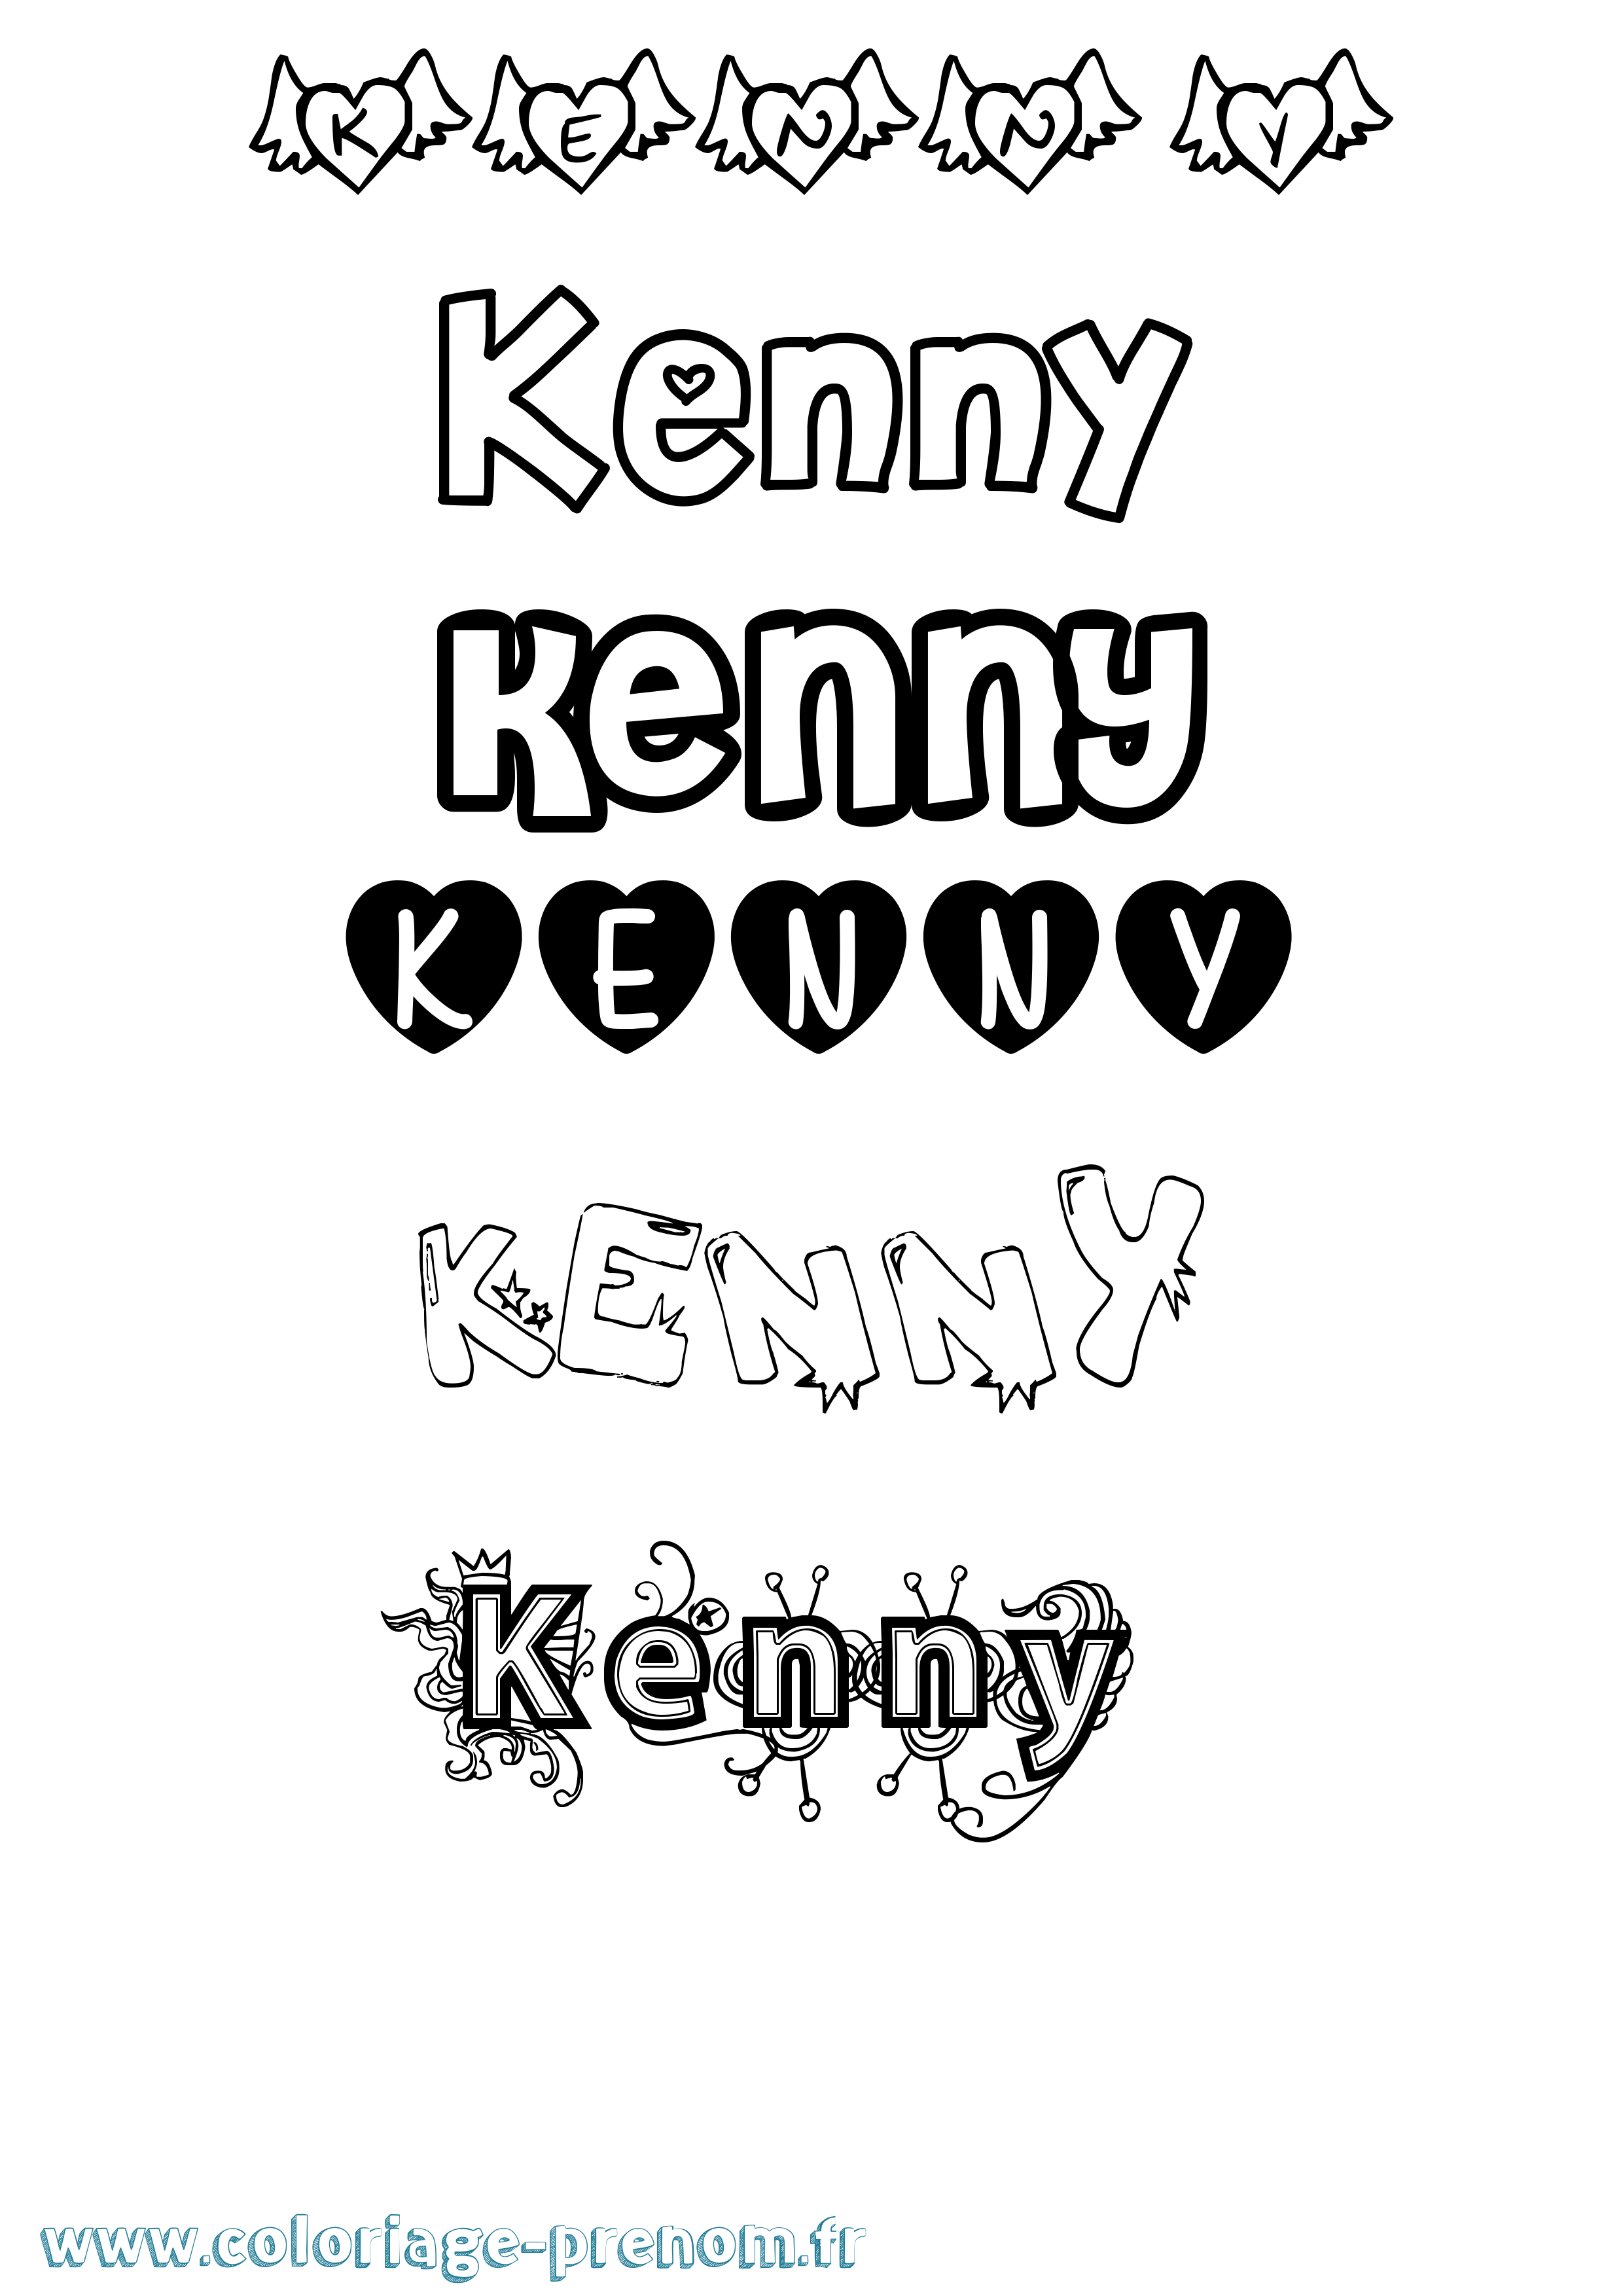 Coloriage prénom Kenny